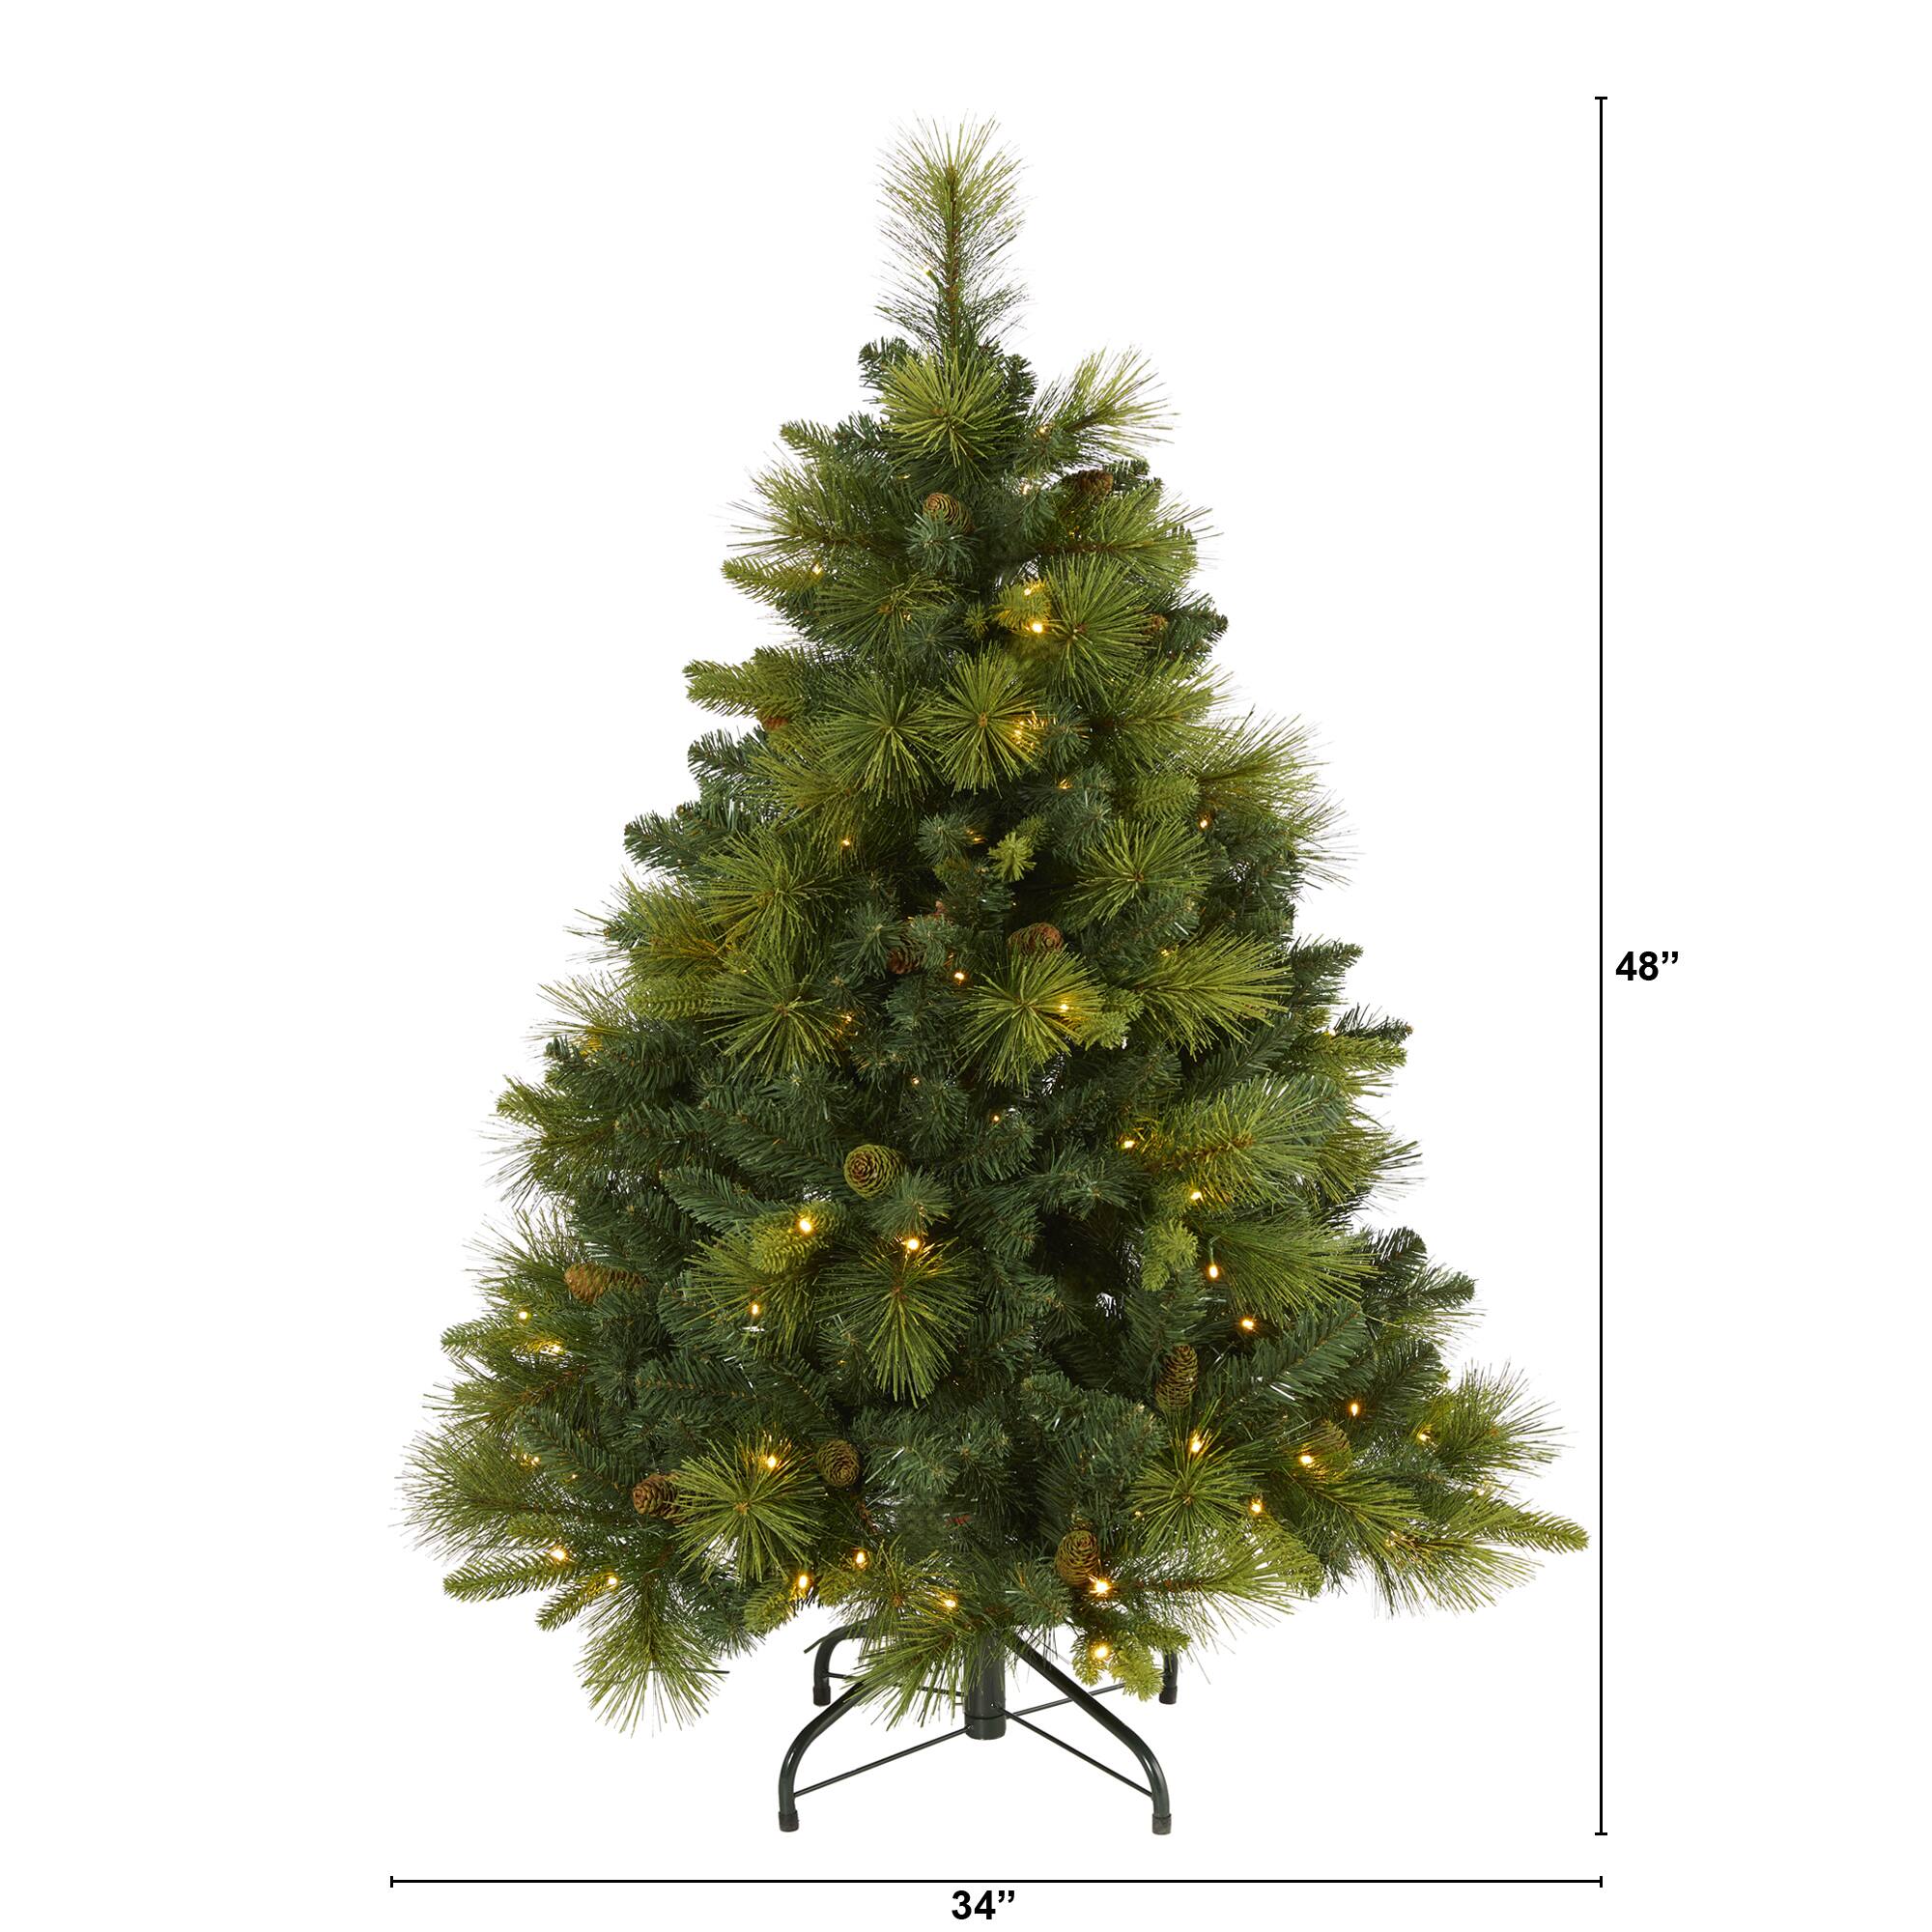 4ft. Pre-Lit North Carolina Mixed Pine Artificial Christmas Tree, Warm White LED Lights